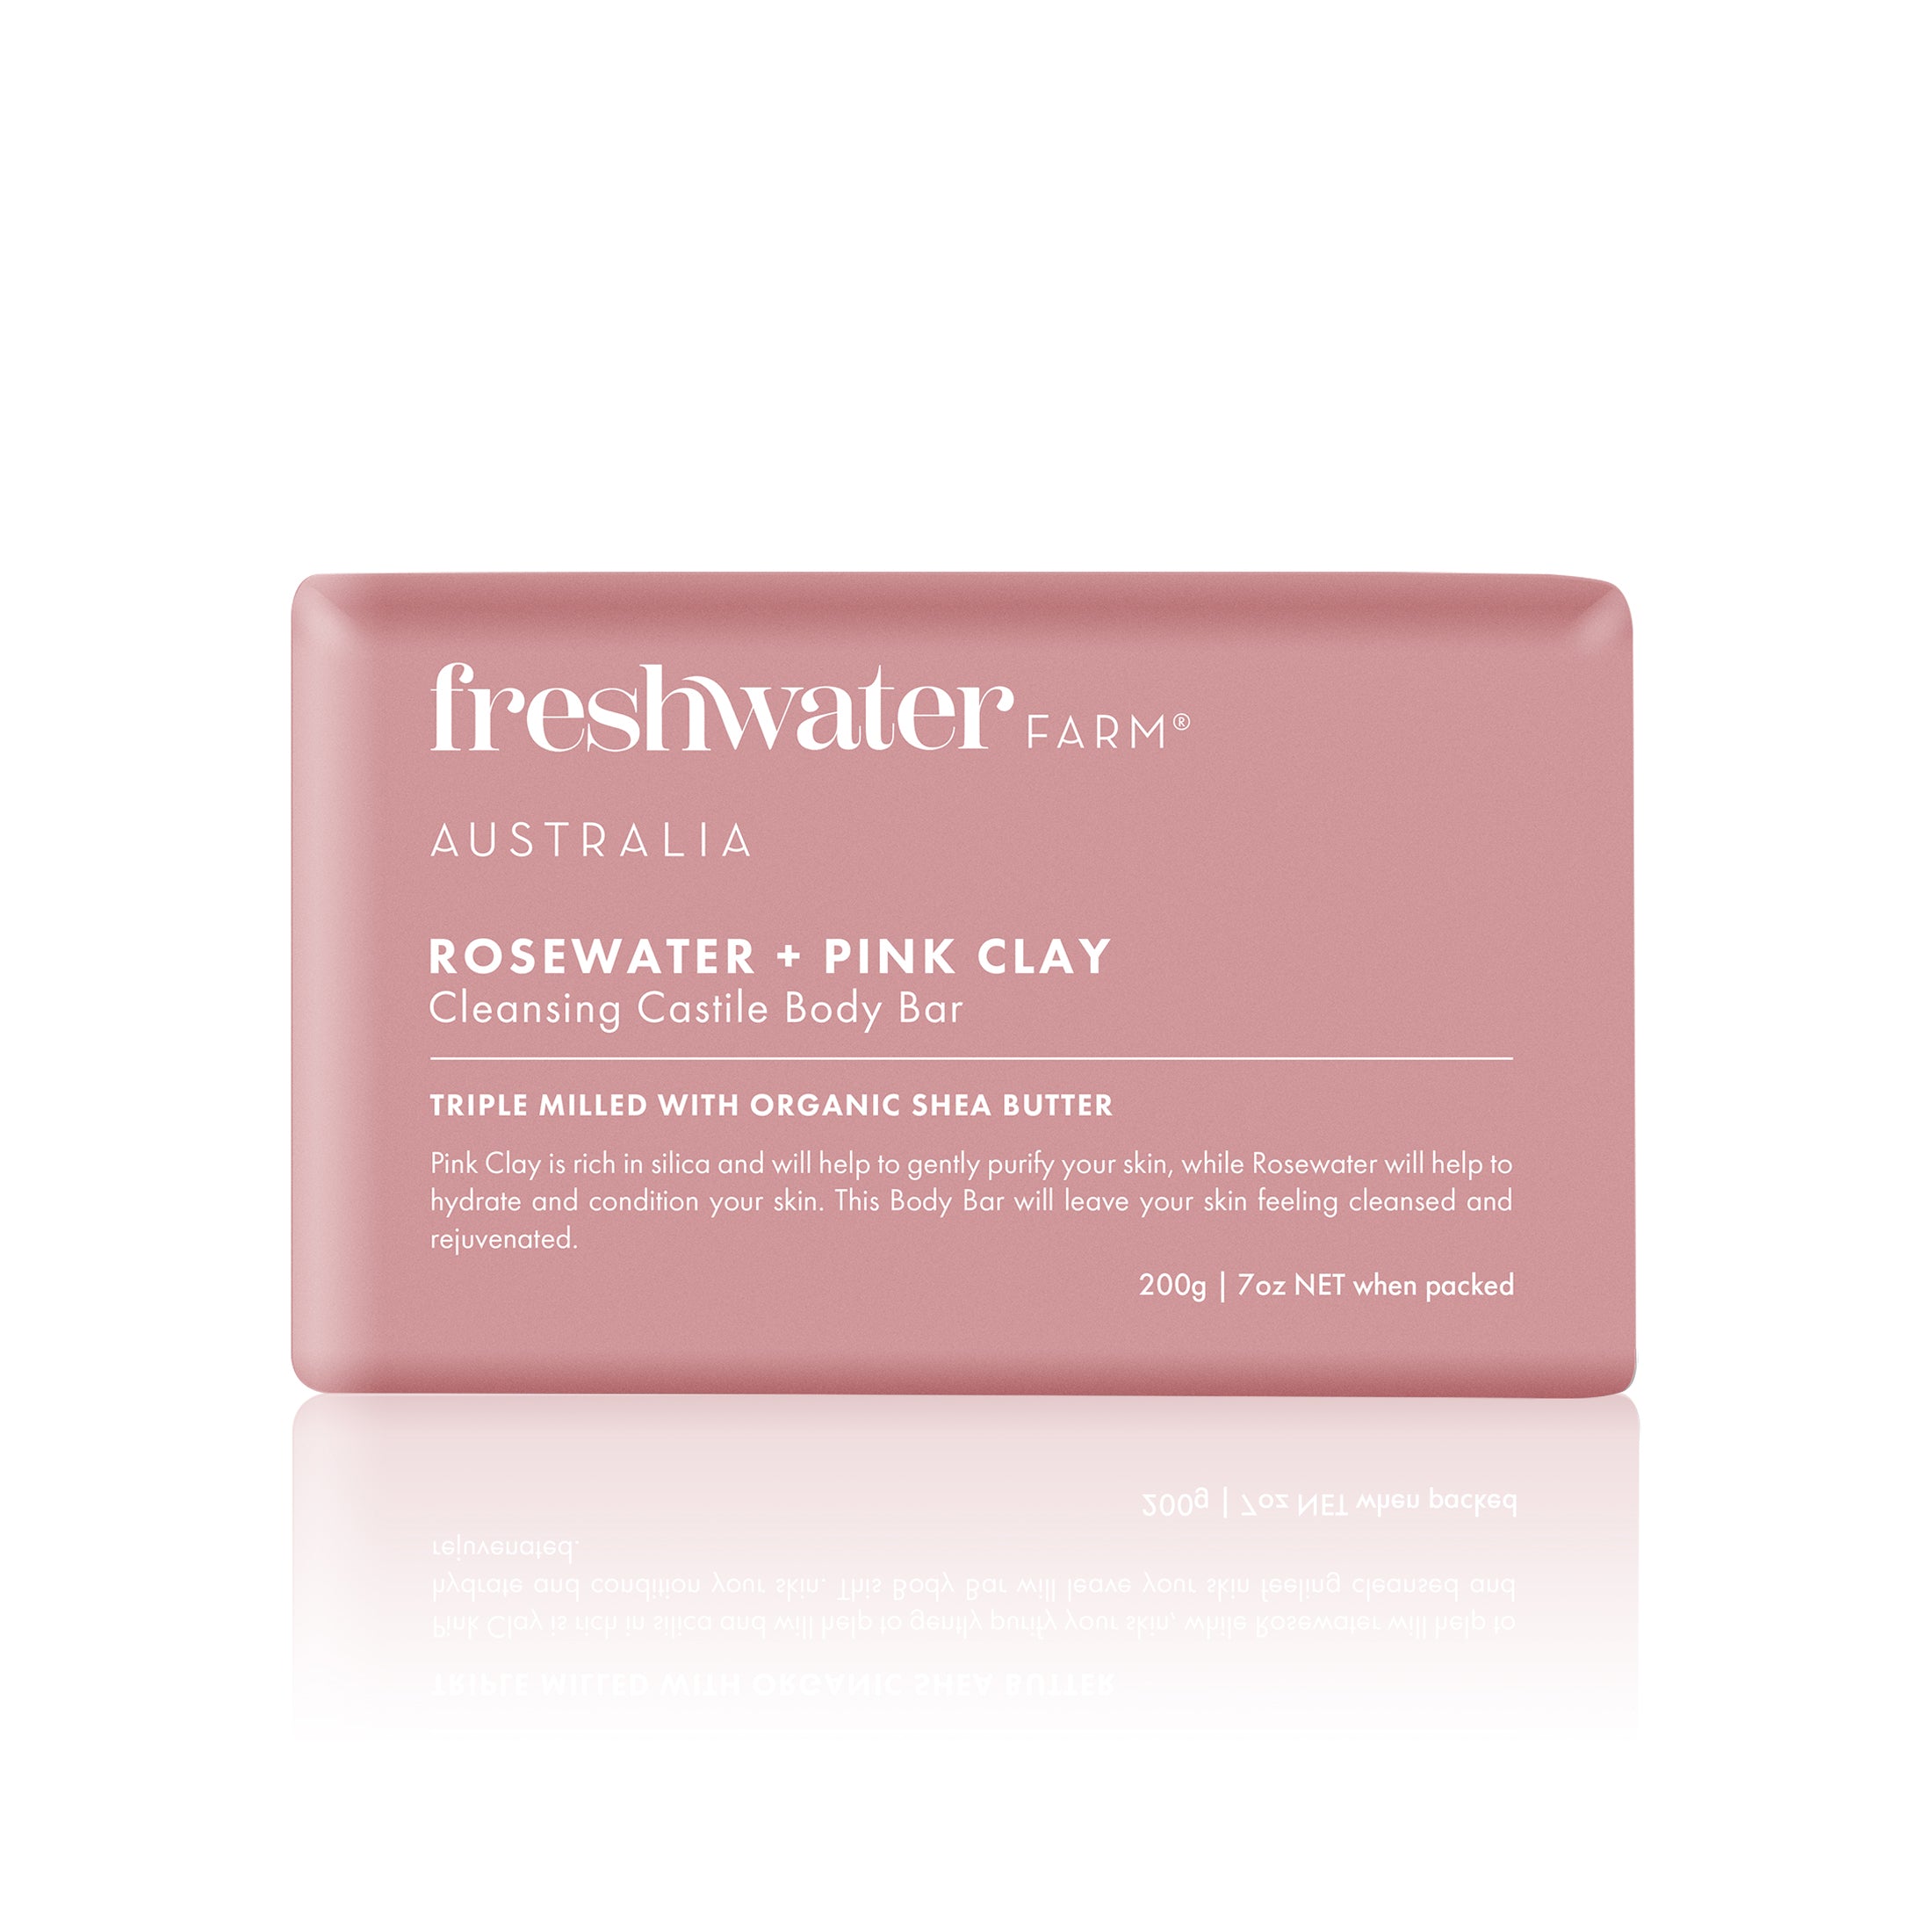 Freshwater Farm Rosewater + Pink Clay 200g Body Bar